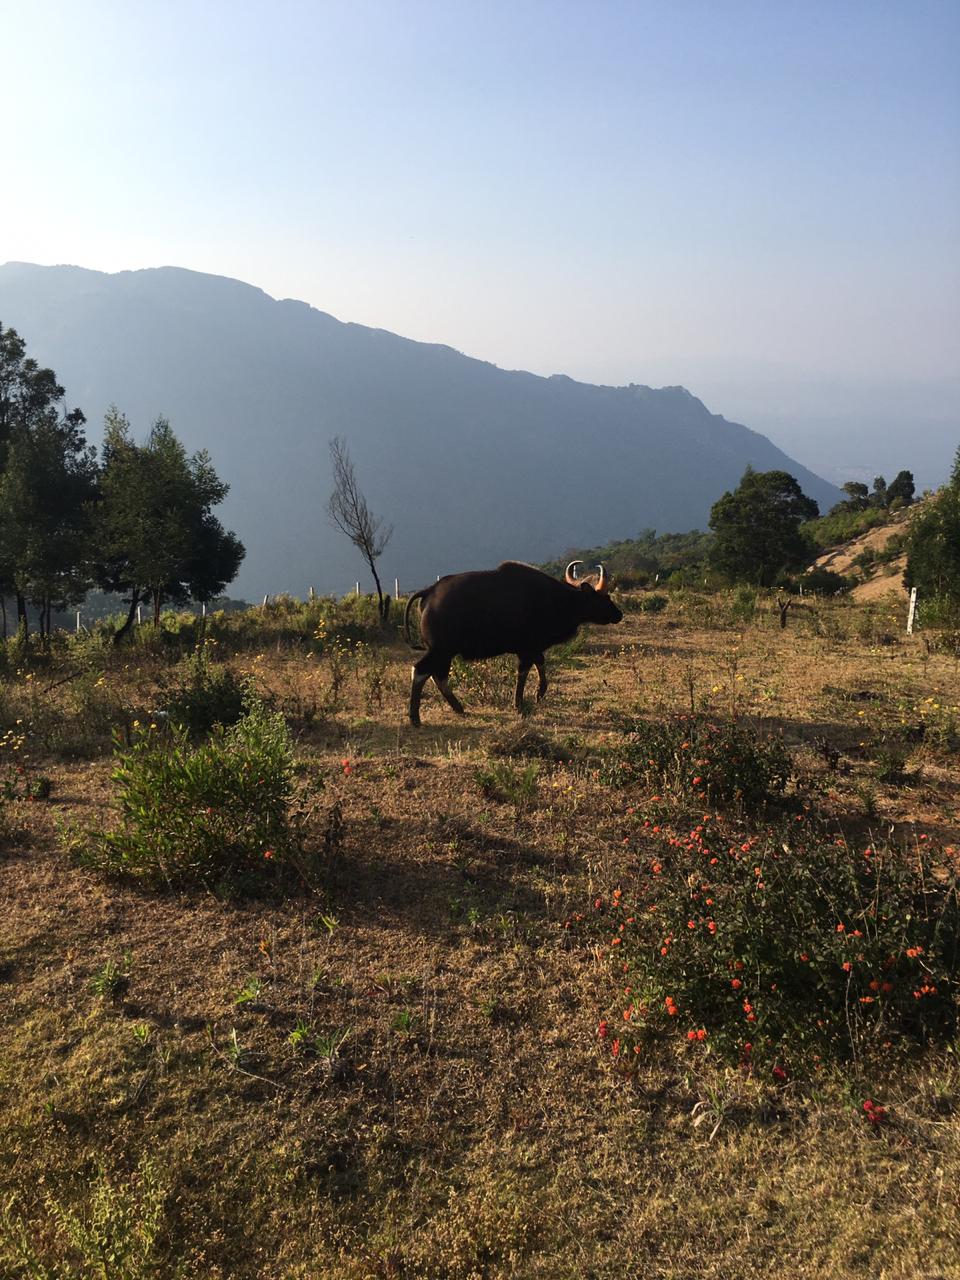 A lone bison